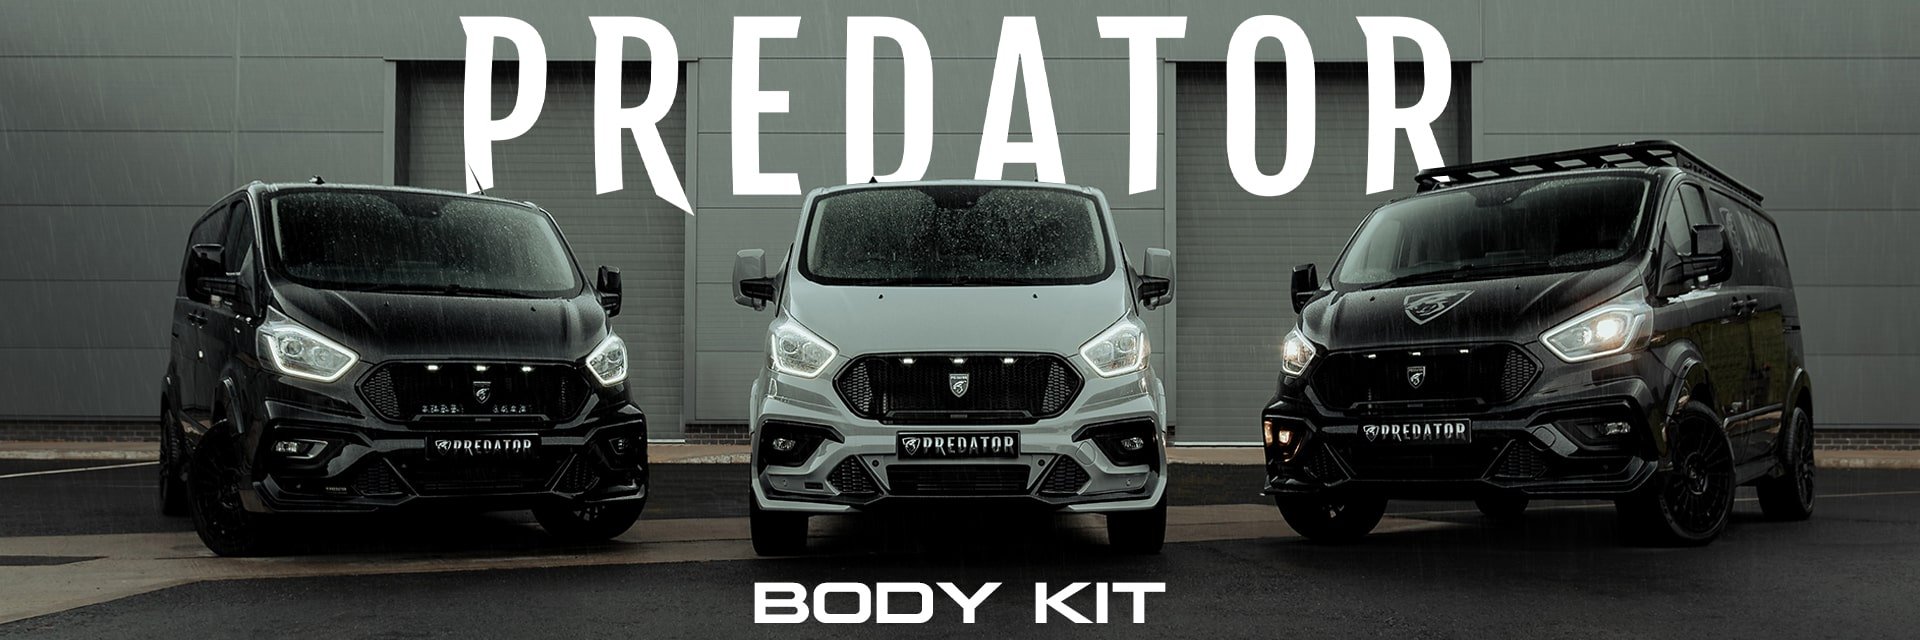 Ford Transit Custom Predator Body Kit - UK